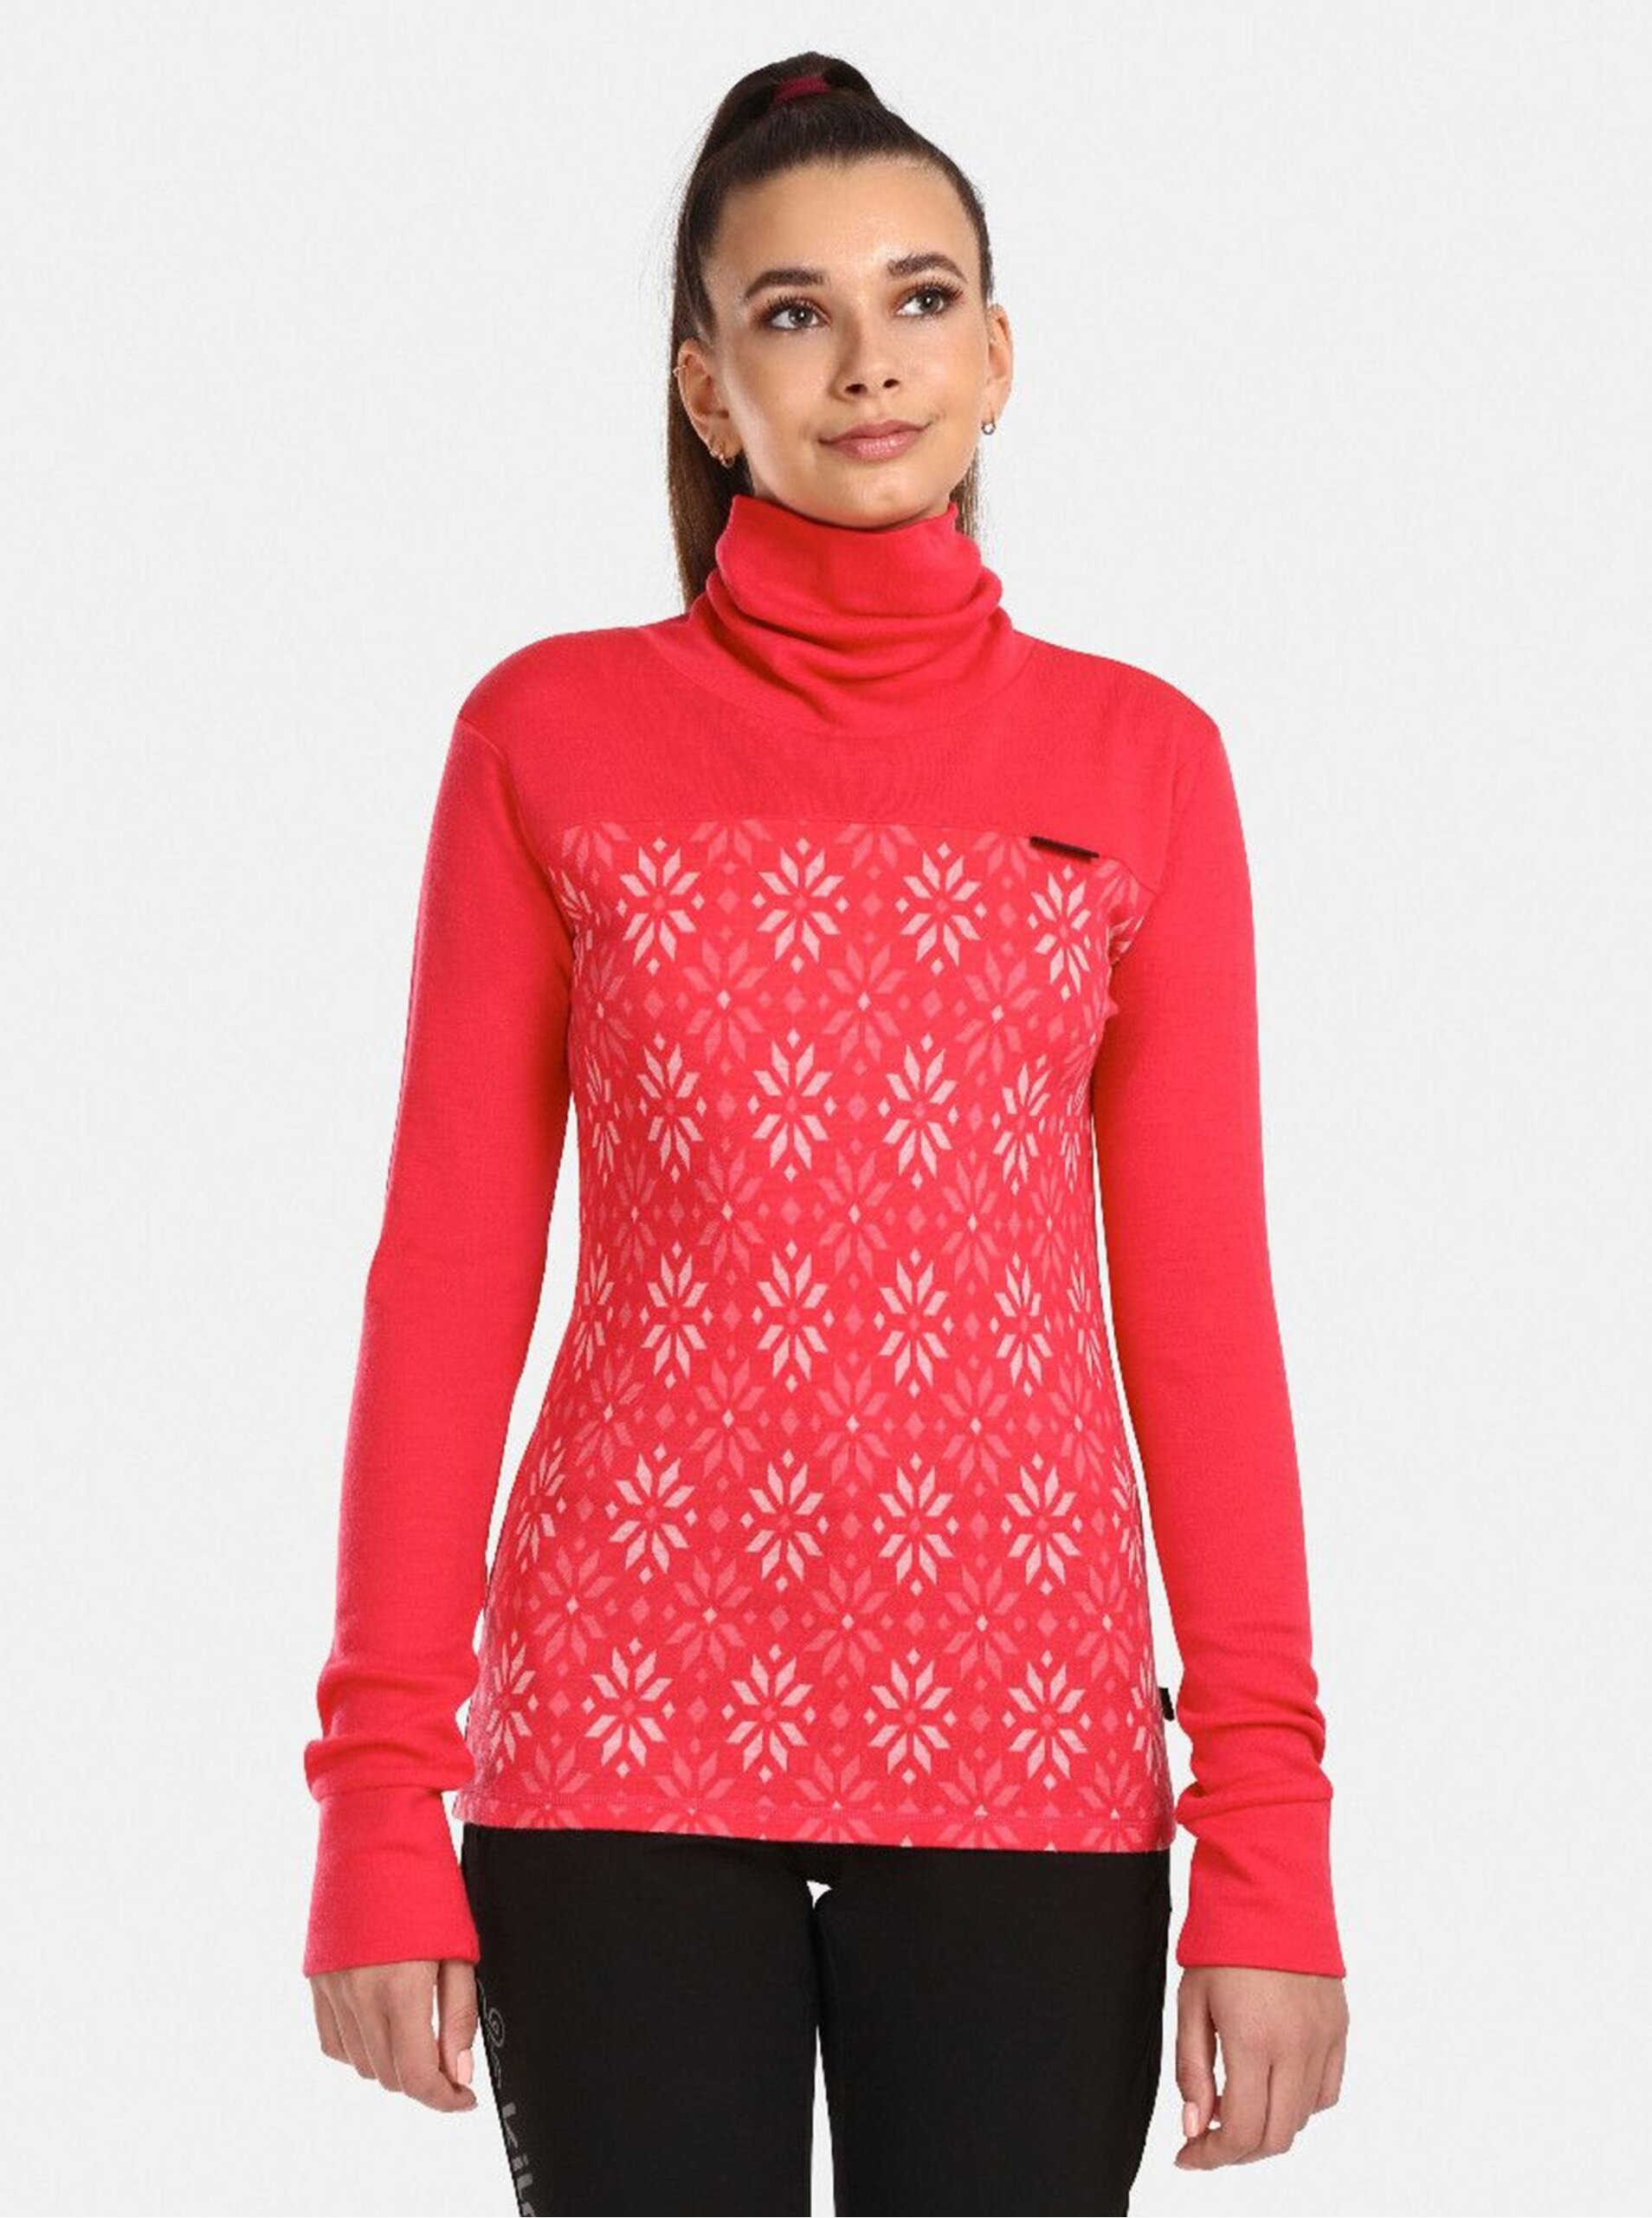 E-shop Tmavě růžové dámské vzorované tričko s rolákem z merino vlny Kilpi JANNU